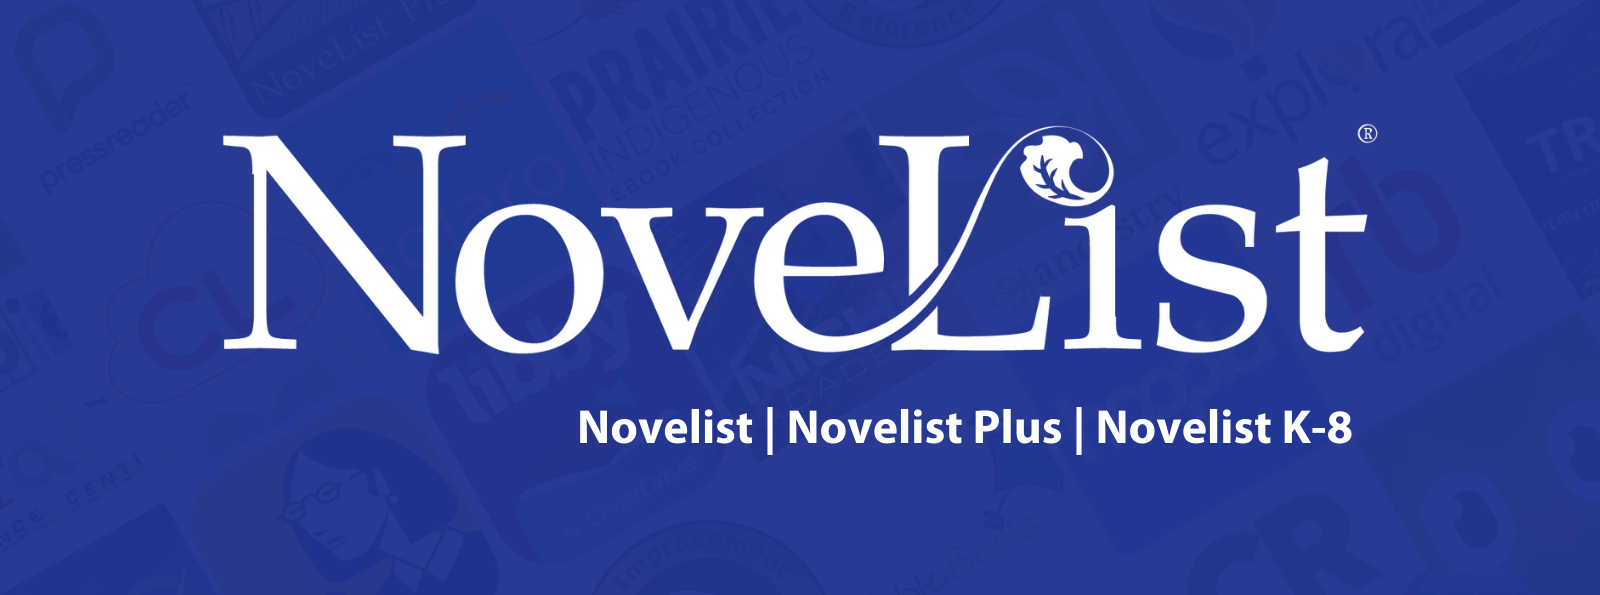 NoveList Answers 'What Should I Read Next?'